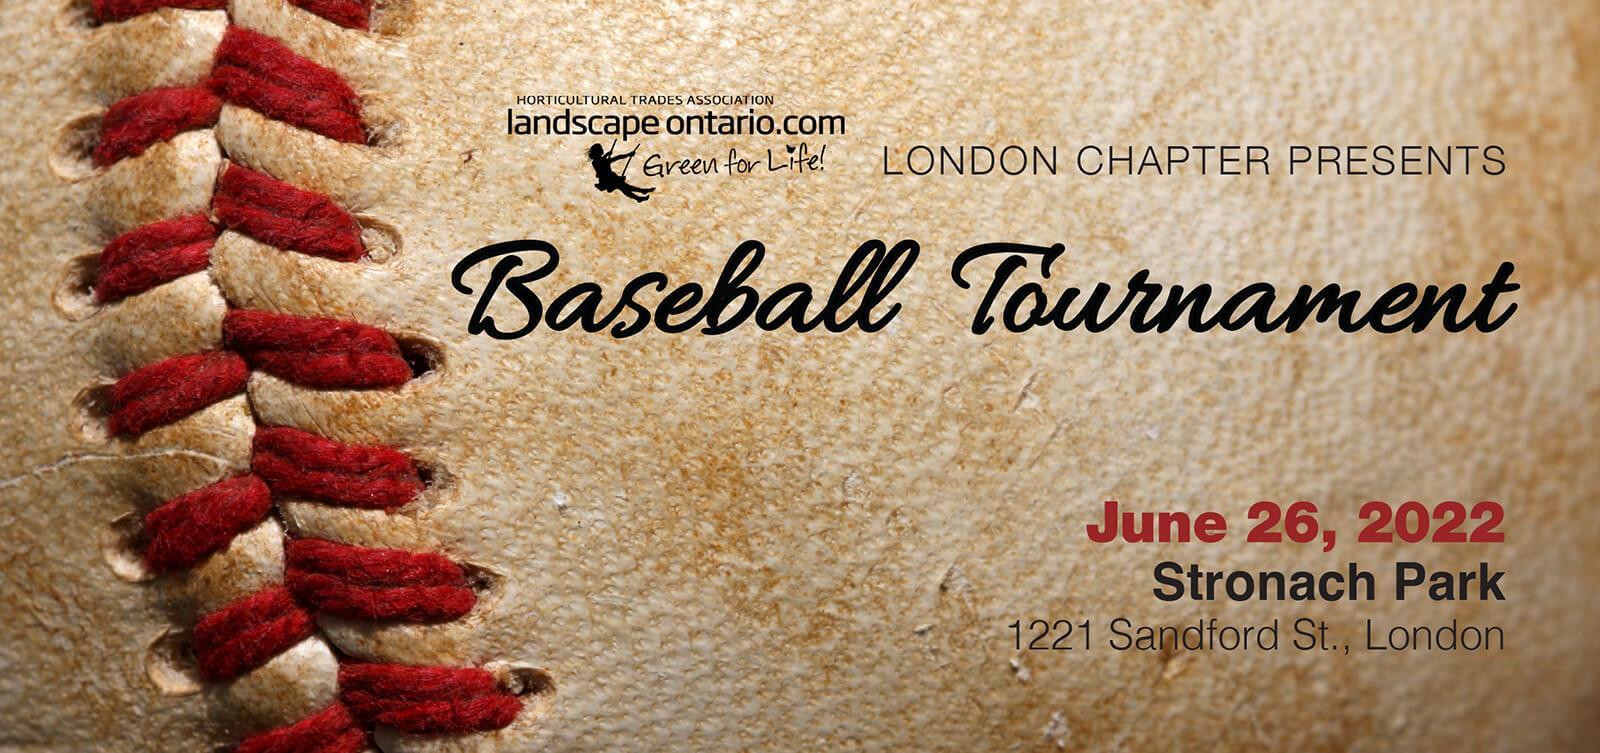 London Chapter Baseball Tournament 2022